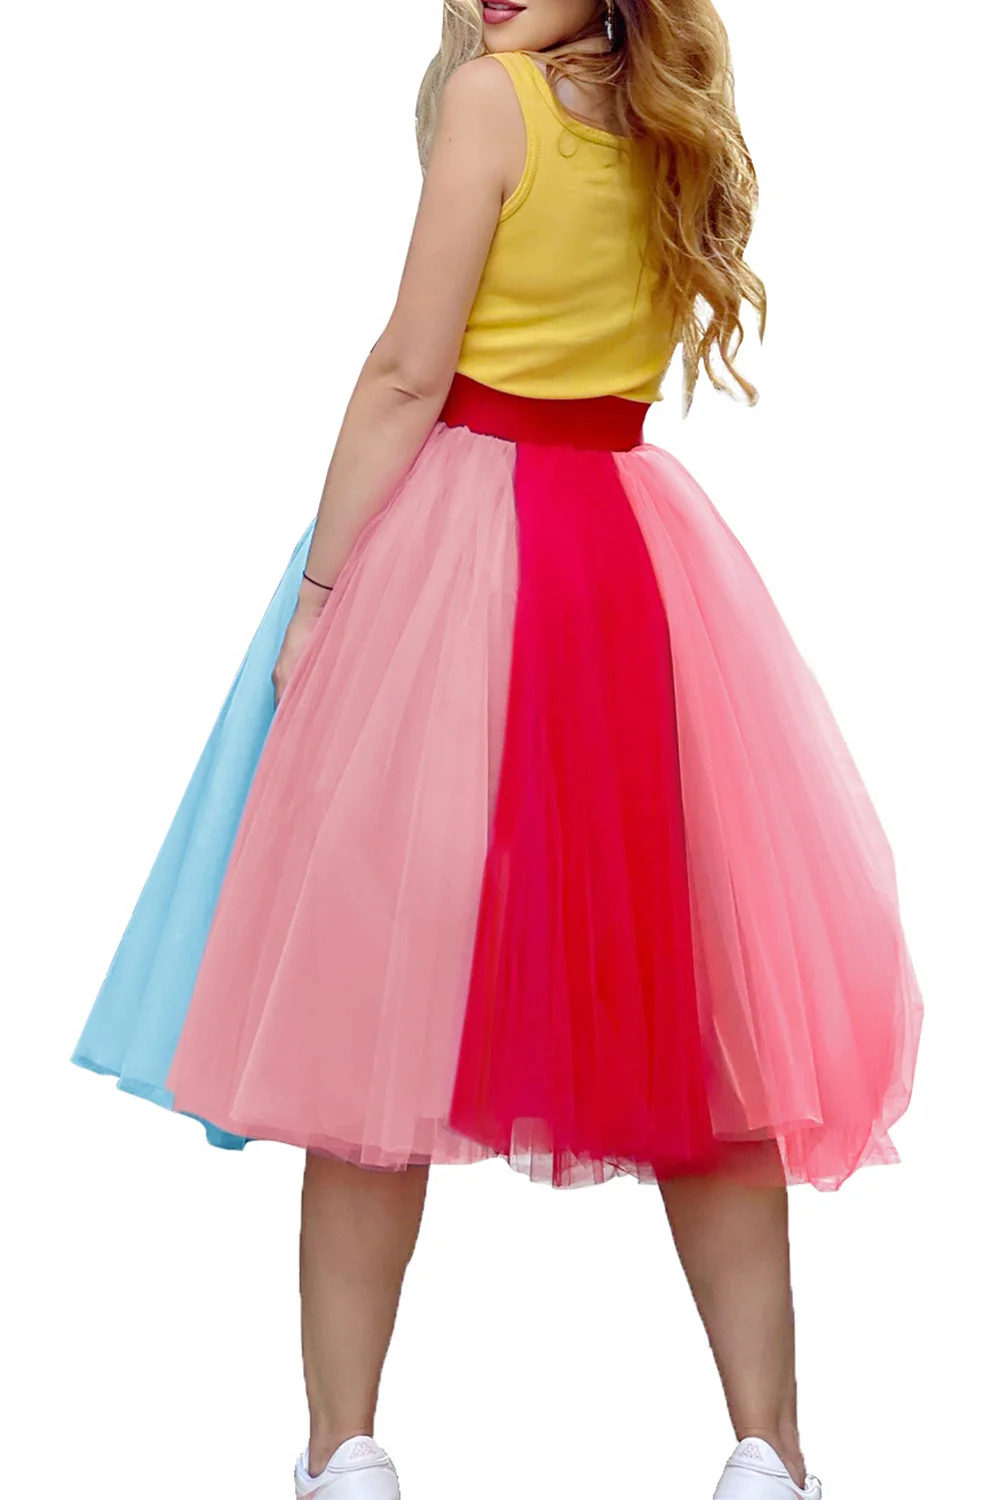 

MisShow Rainbow 4 Layers Tutu Skirt Short Puffy Soft Tulle Petticoat for Party Dance Ballet Costume Short Tutu Dress Underskirt